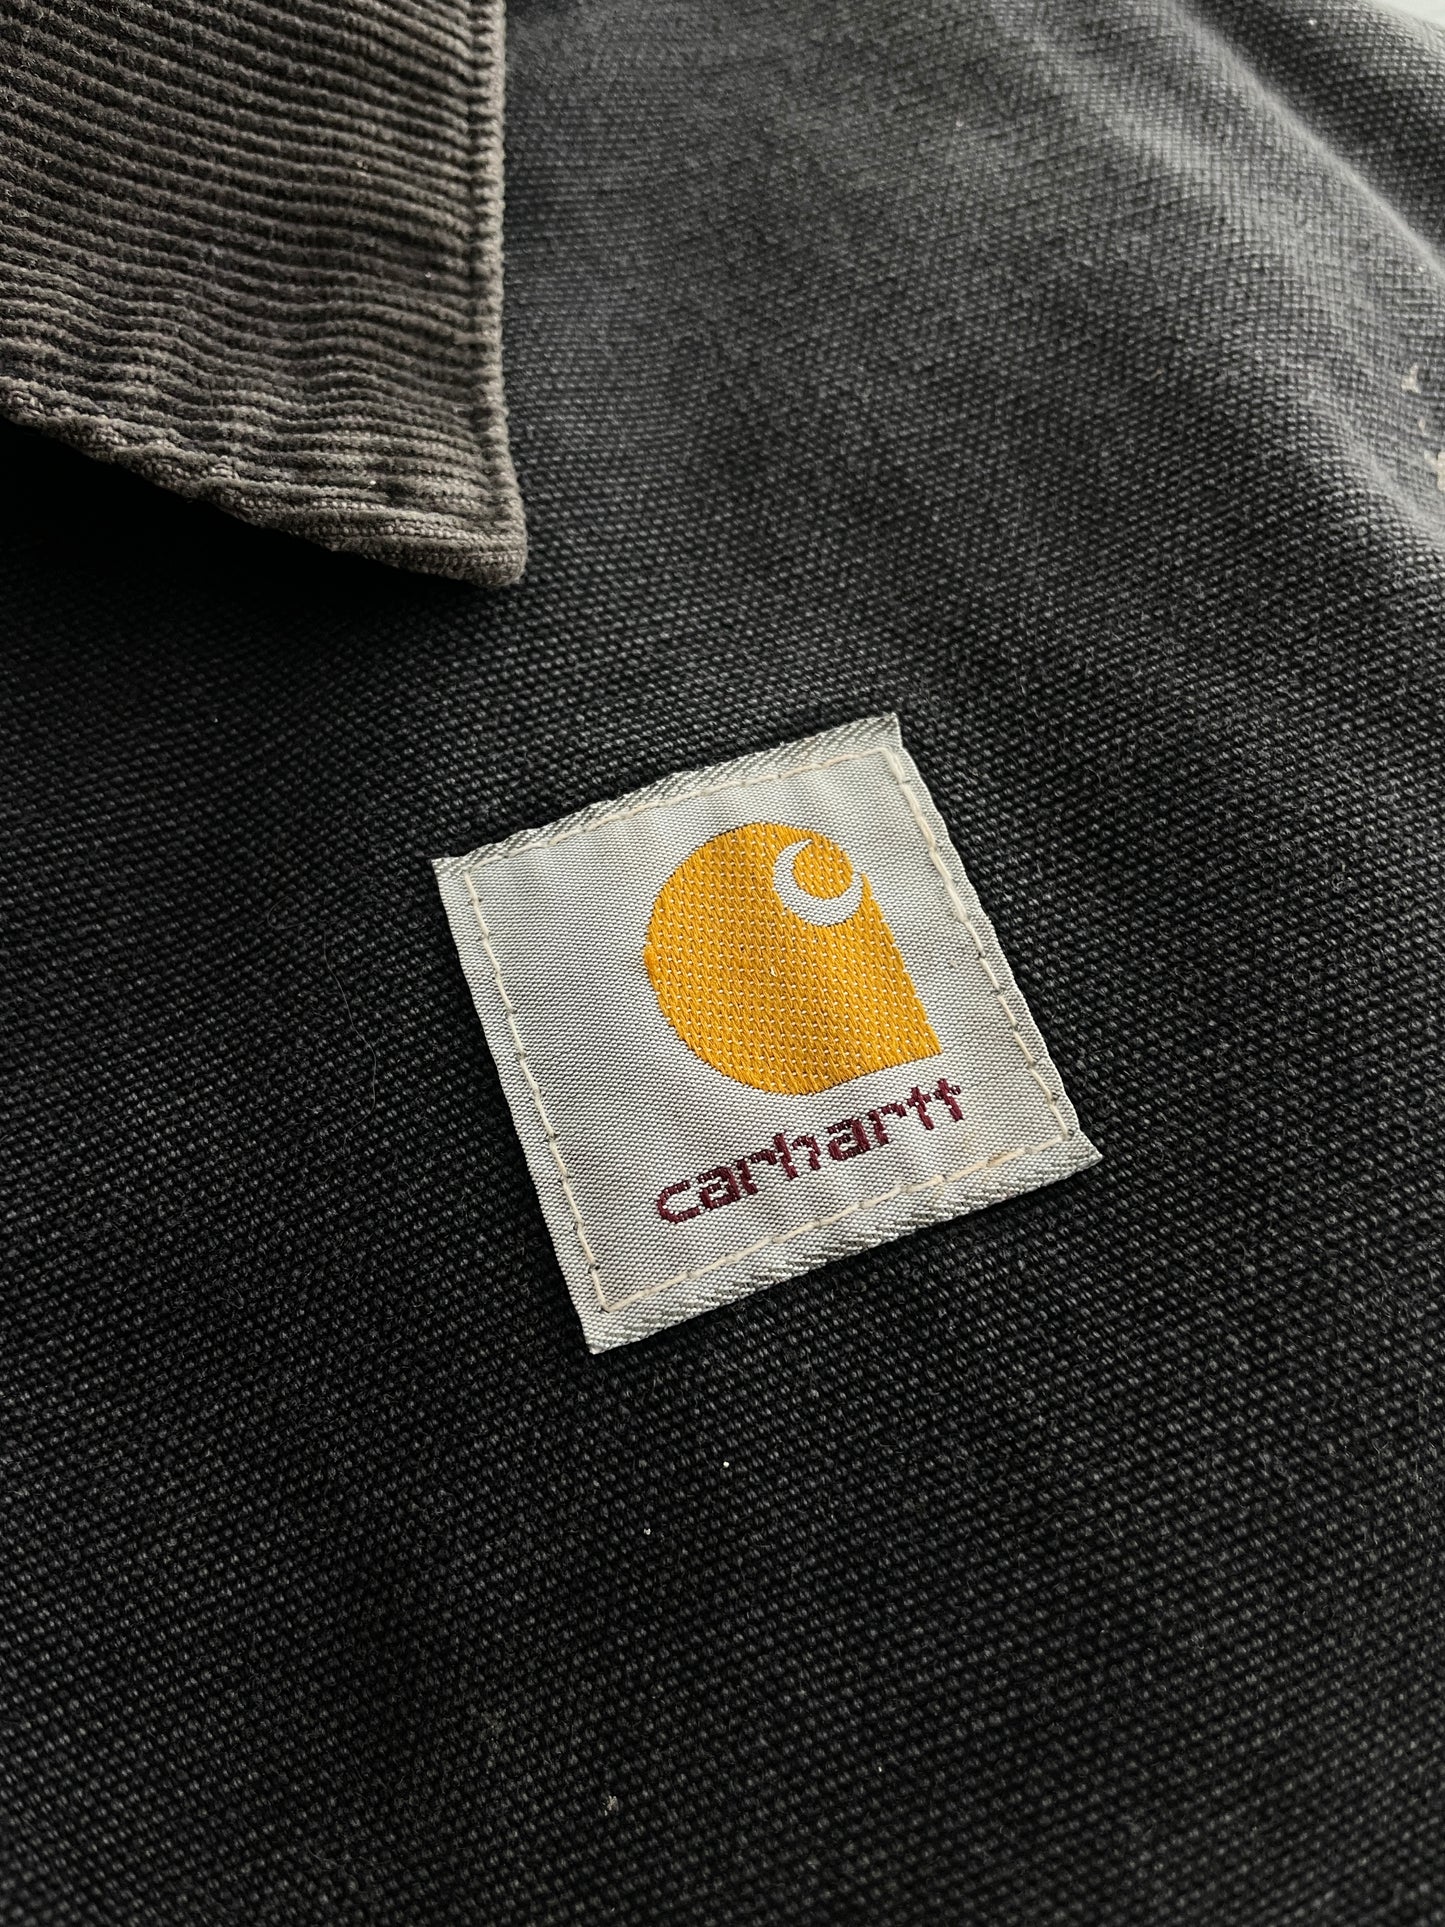 Thrashed Carhartt Detroit Jacket [L]